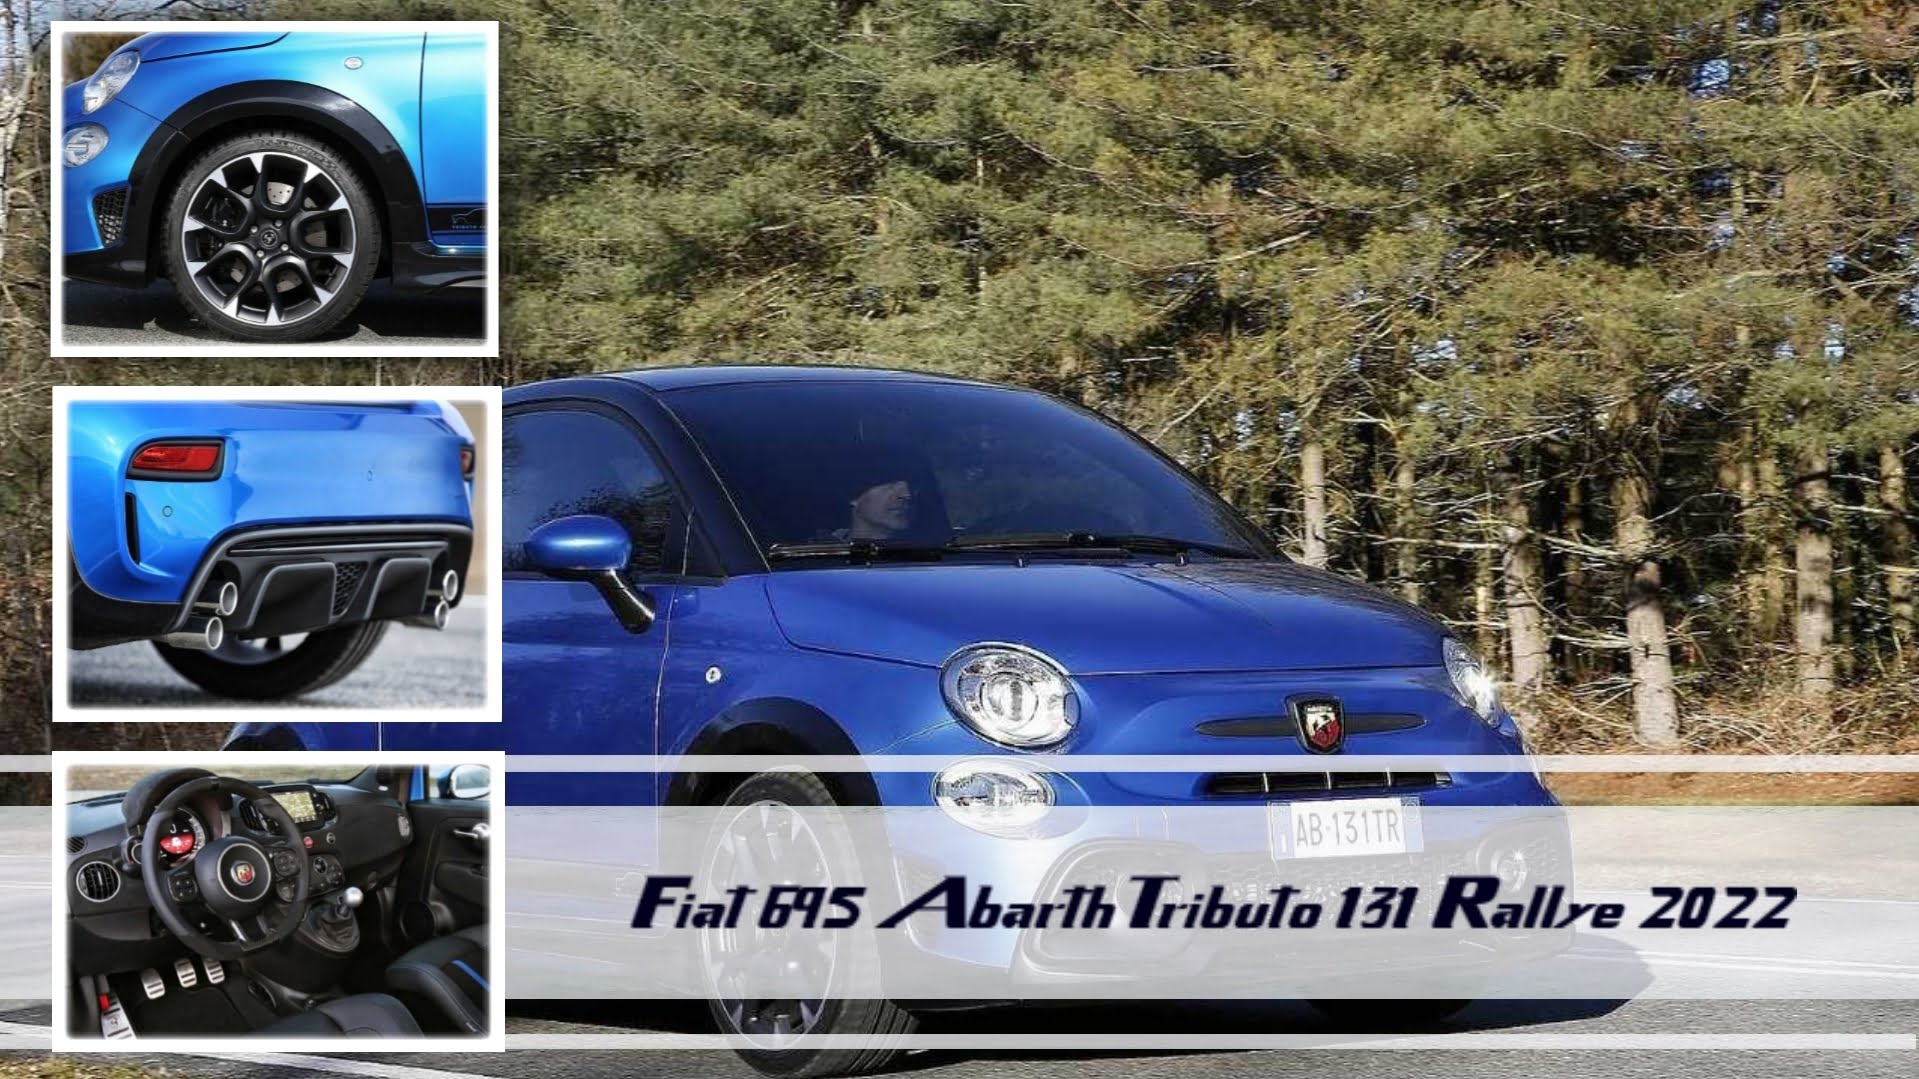 Fiat 695 Abarth Tributo 131 Rallye 2022